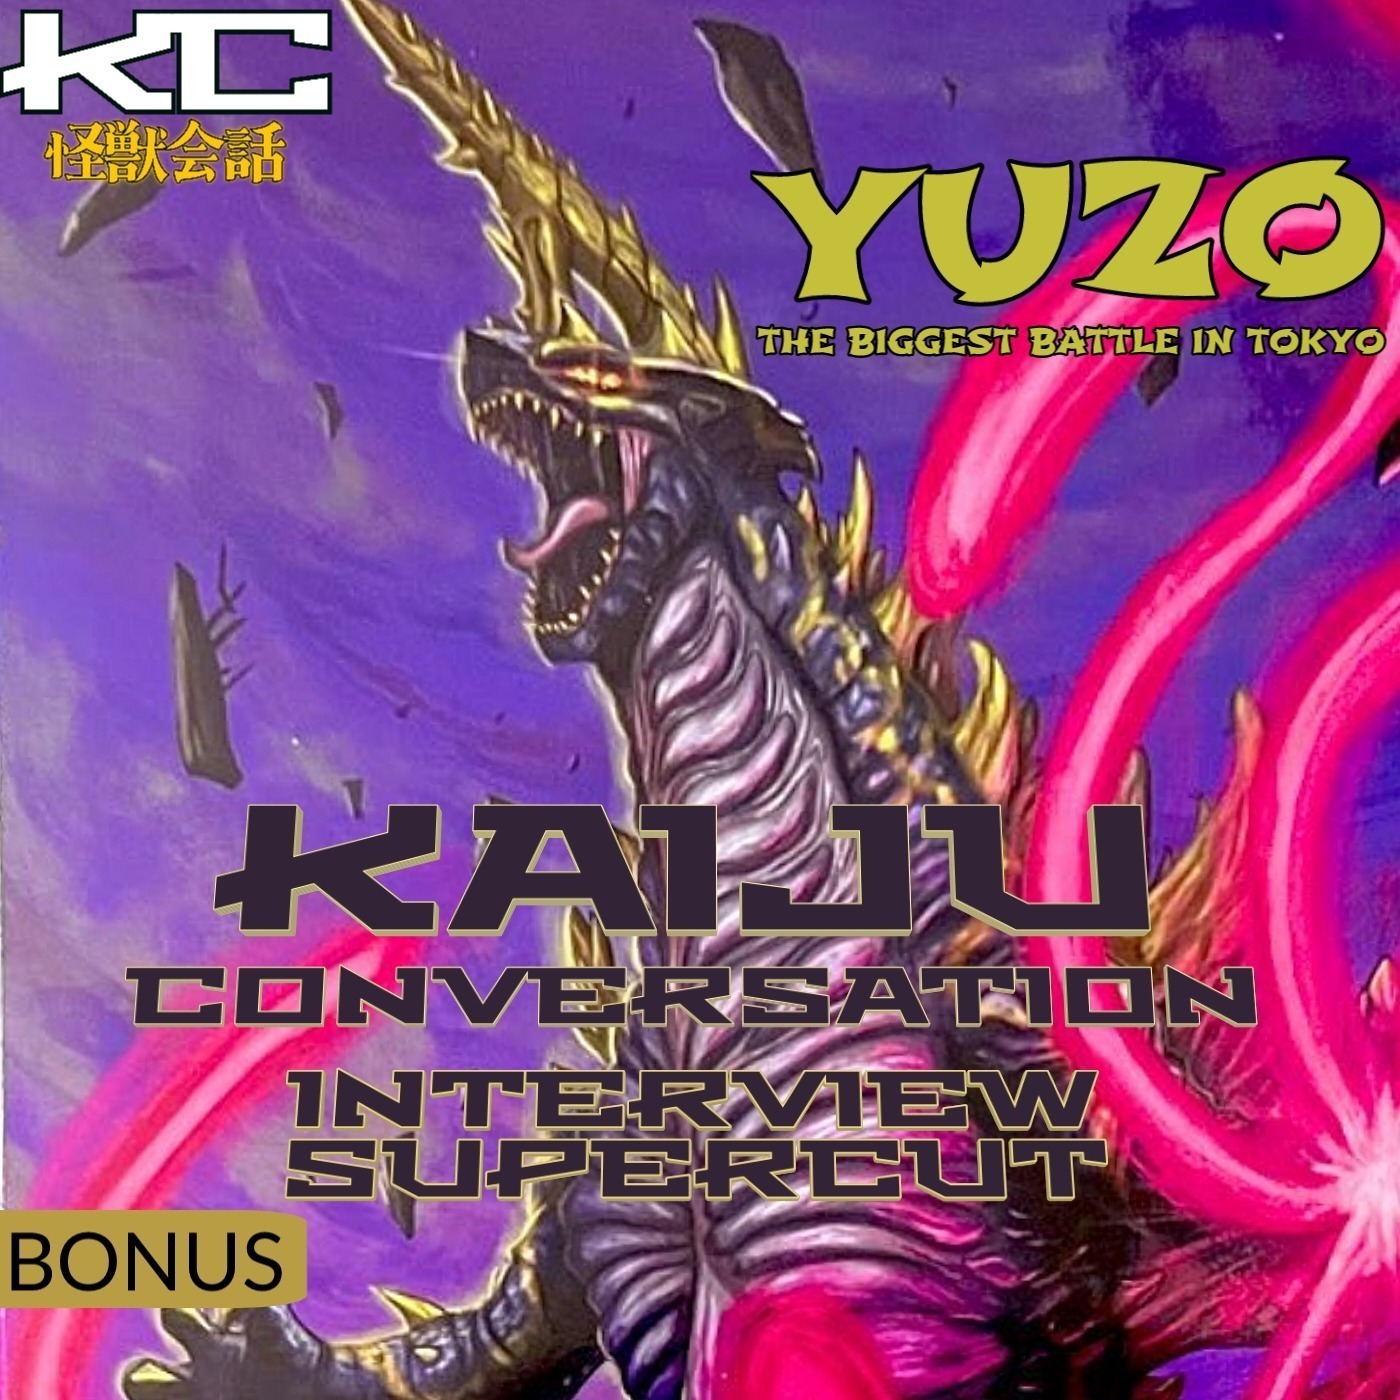 Bonus Episode 22: Yuzo Interview Supercut